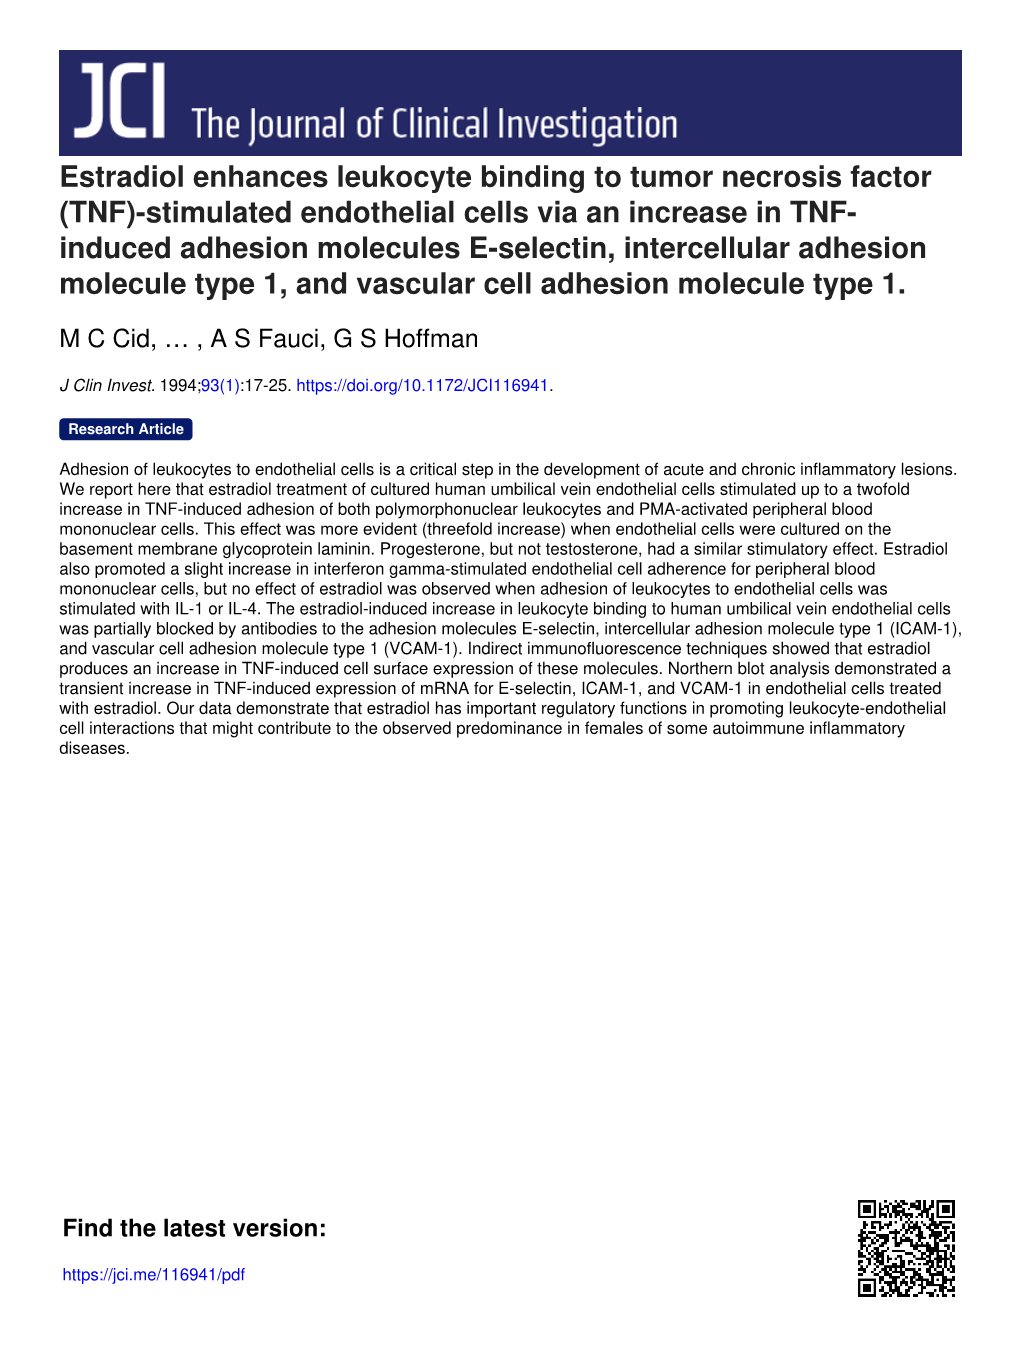 Estradiol Enhances Leukocyte Binding to Tumor Necrosis Factor (TNF